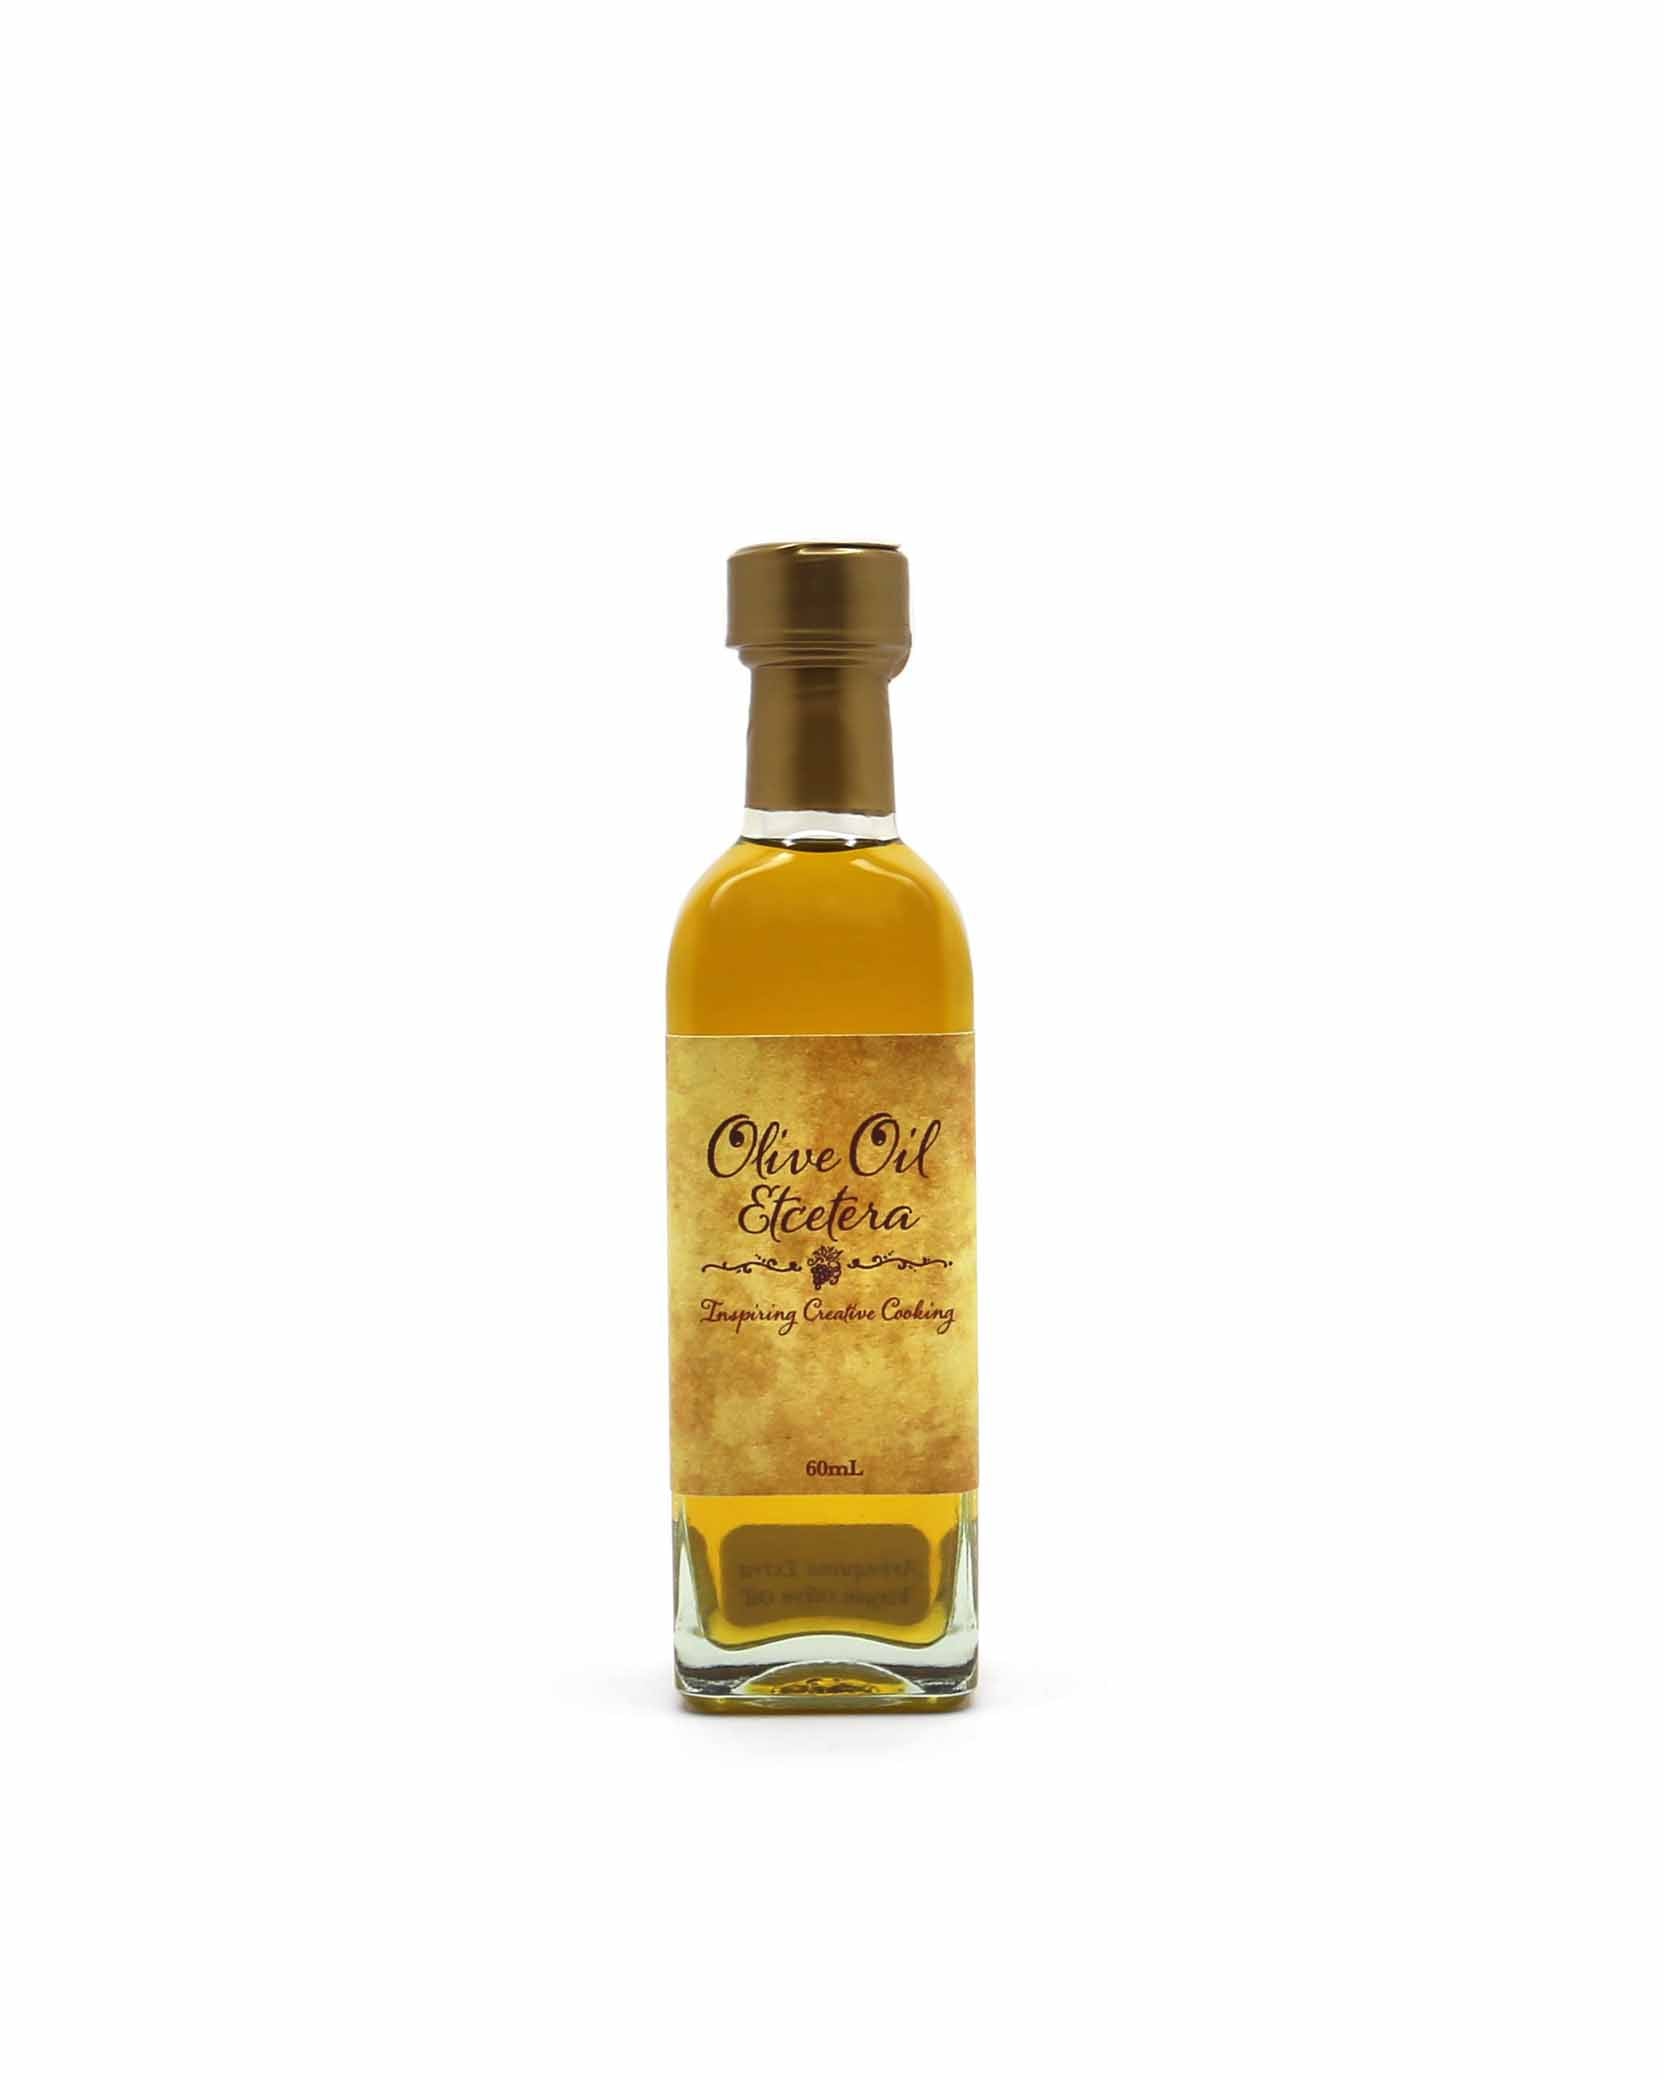 Oregano Olive Oil in a 60 ml bottle from Olive Oil Etcetera in Doylestown 